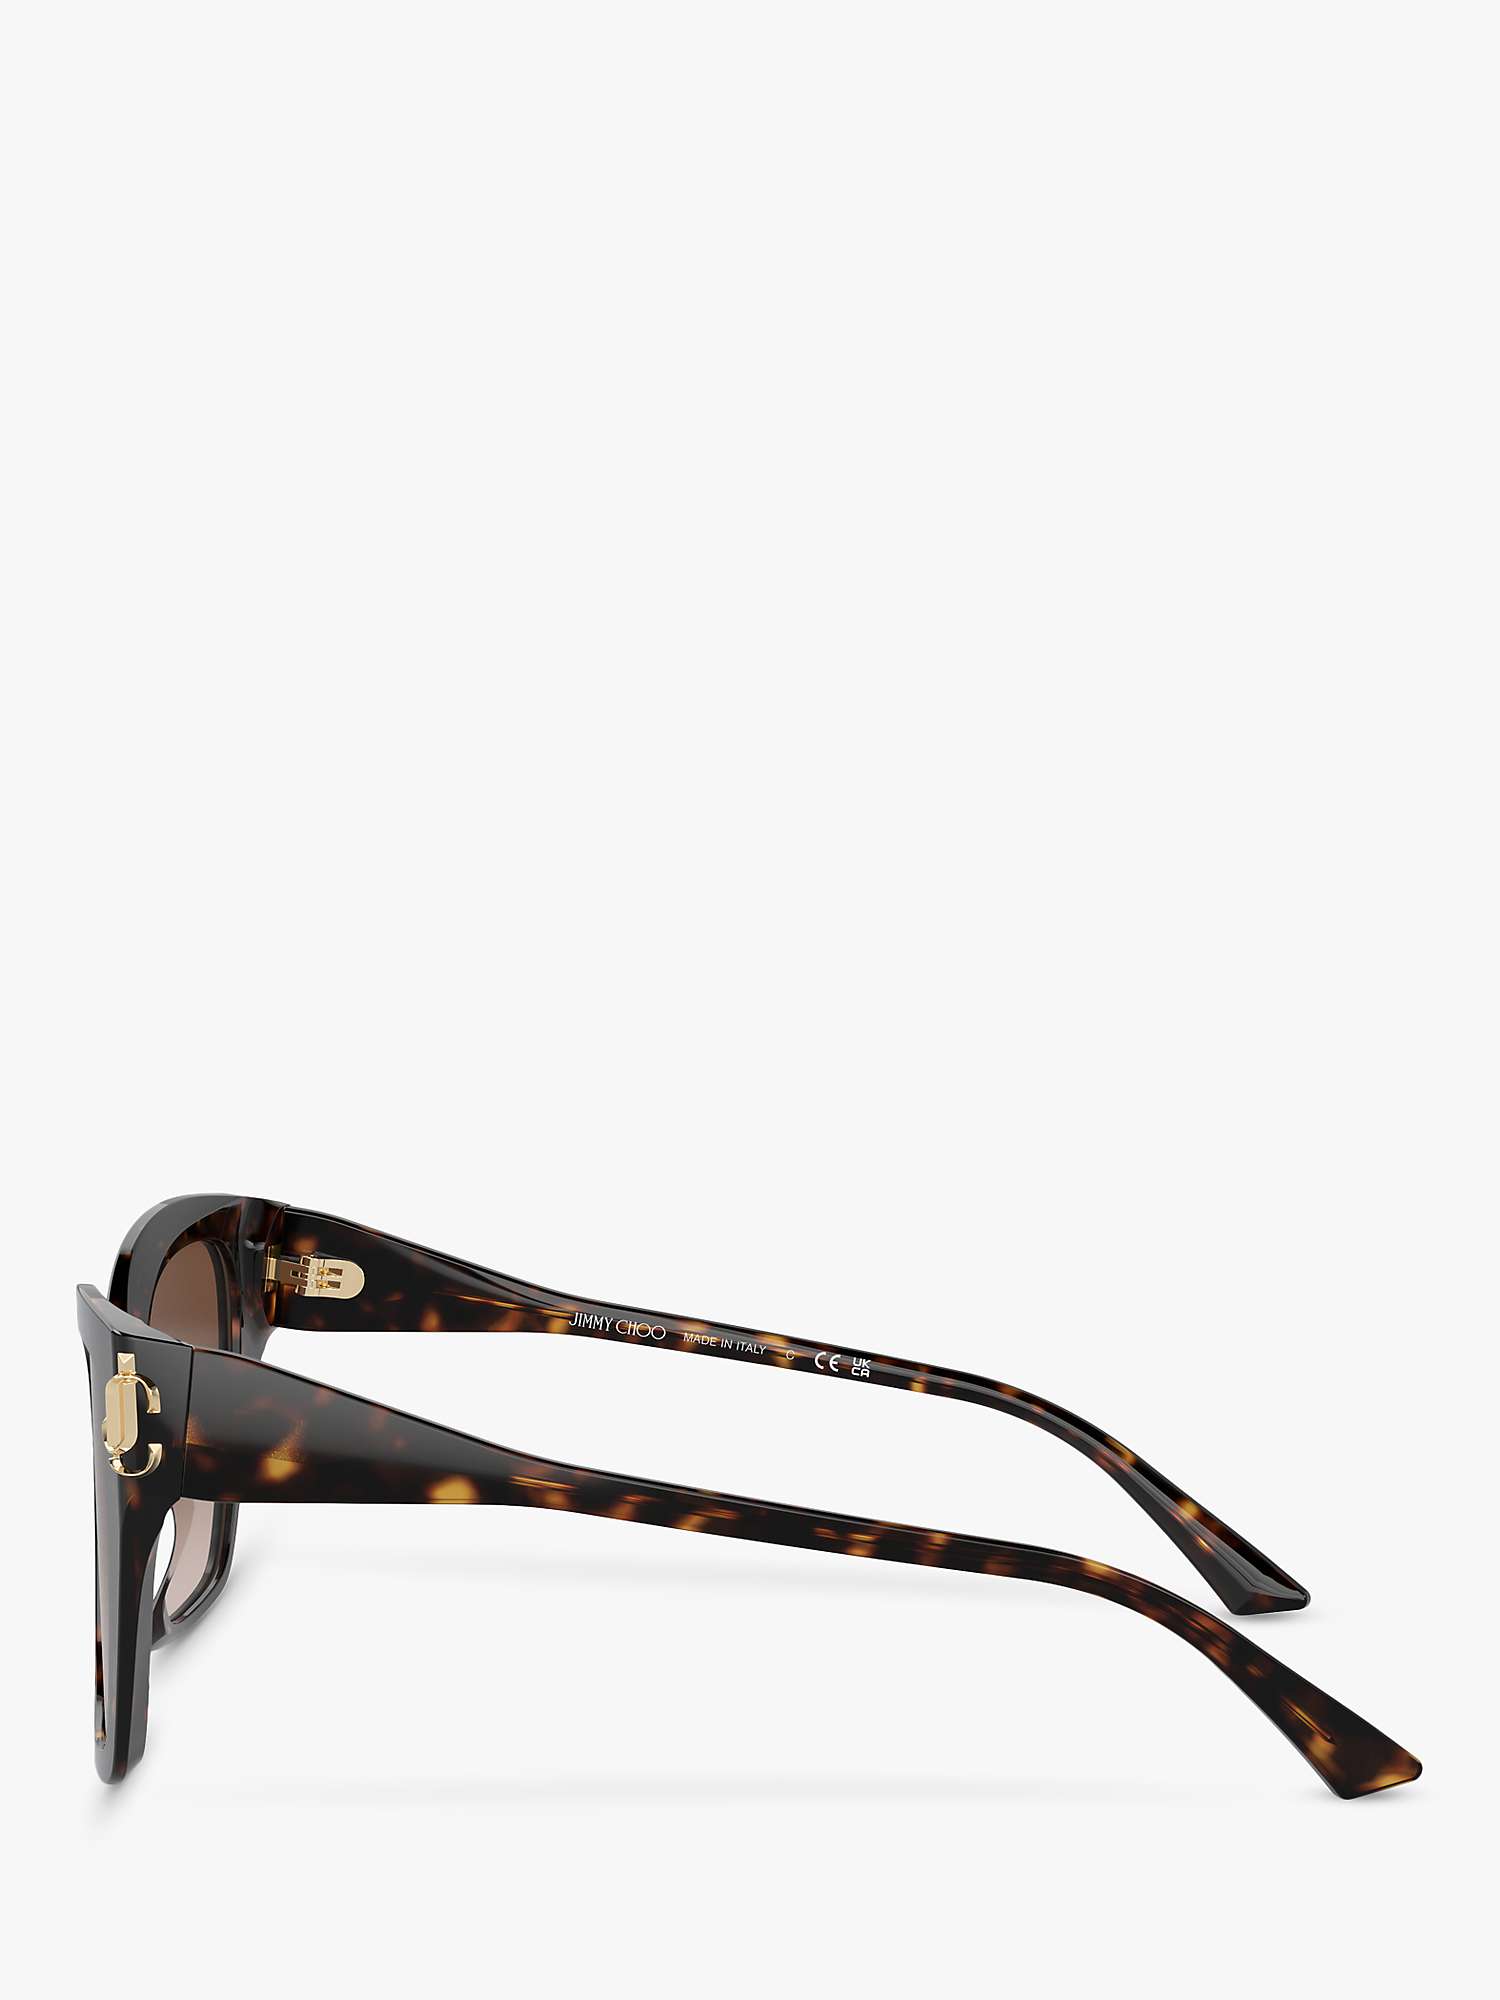 Buy Jimmy Choo JC5012 Women's Cat's Eye Sunglasses, Tortoiseshell/Brown Gradient Online at johnlewis.com